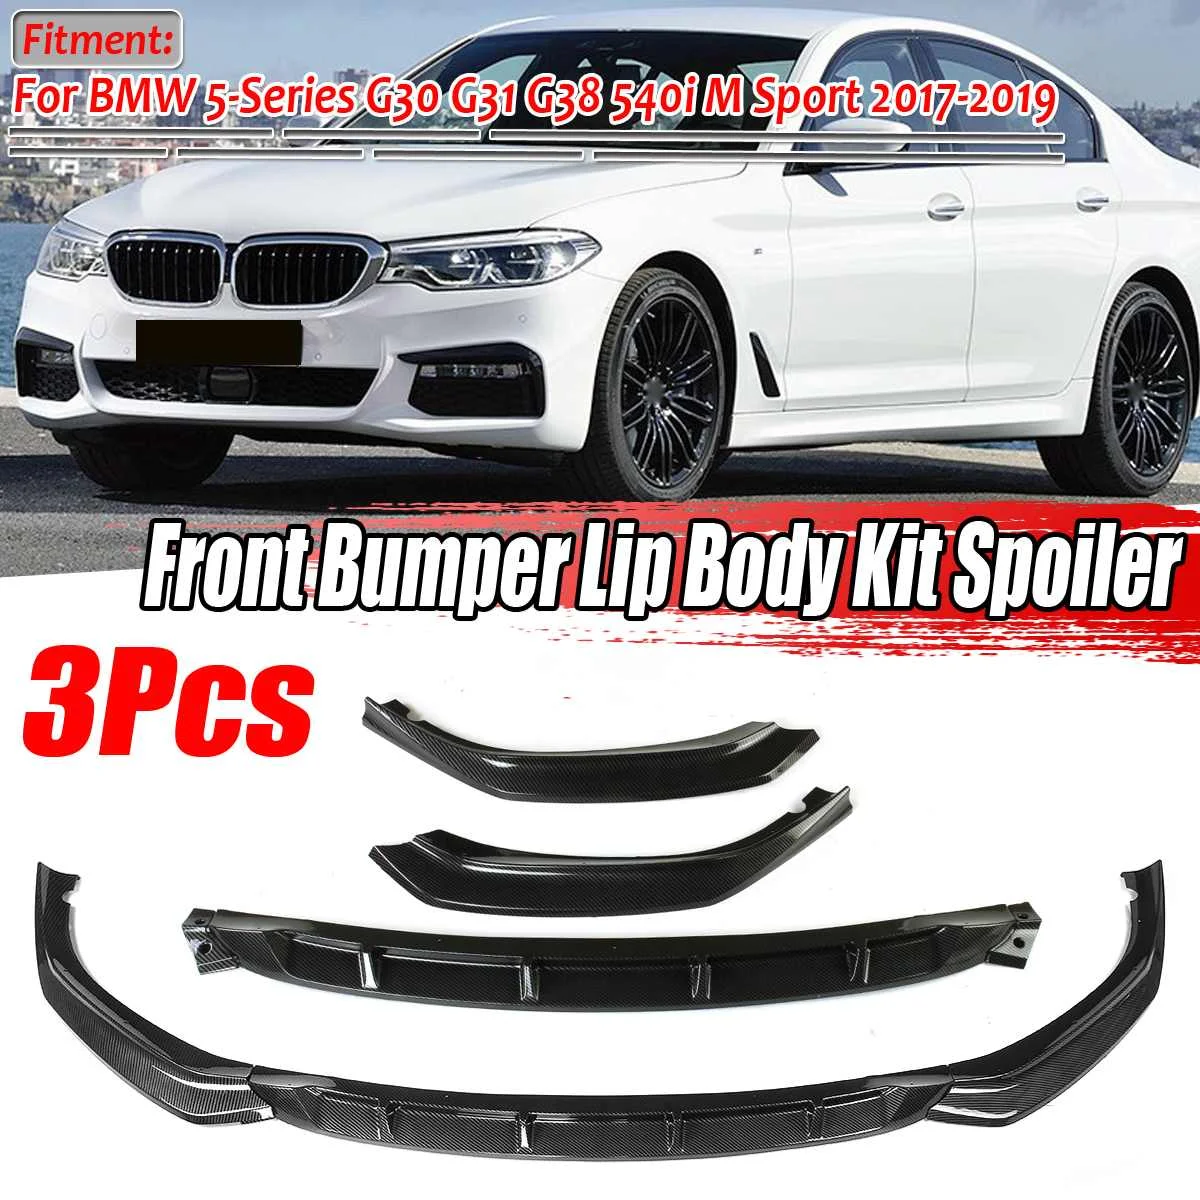 

3Piece Car Front Bumper Lip Splitter Diffuser Body Kit Spoiler Bumper Guard Protection For BMW 5-Series G30 G31 G38 540i M Sport